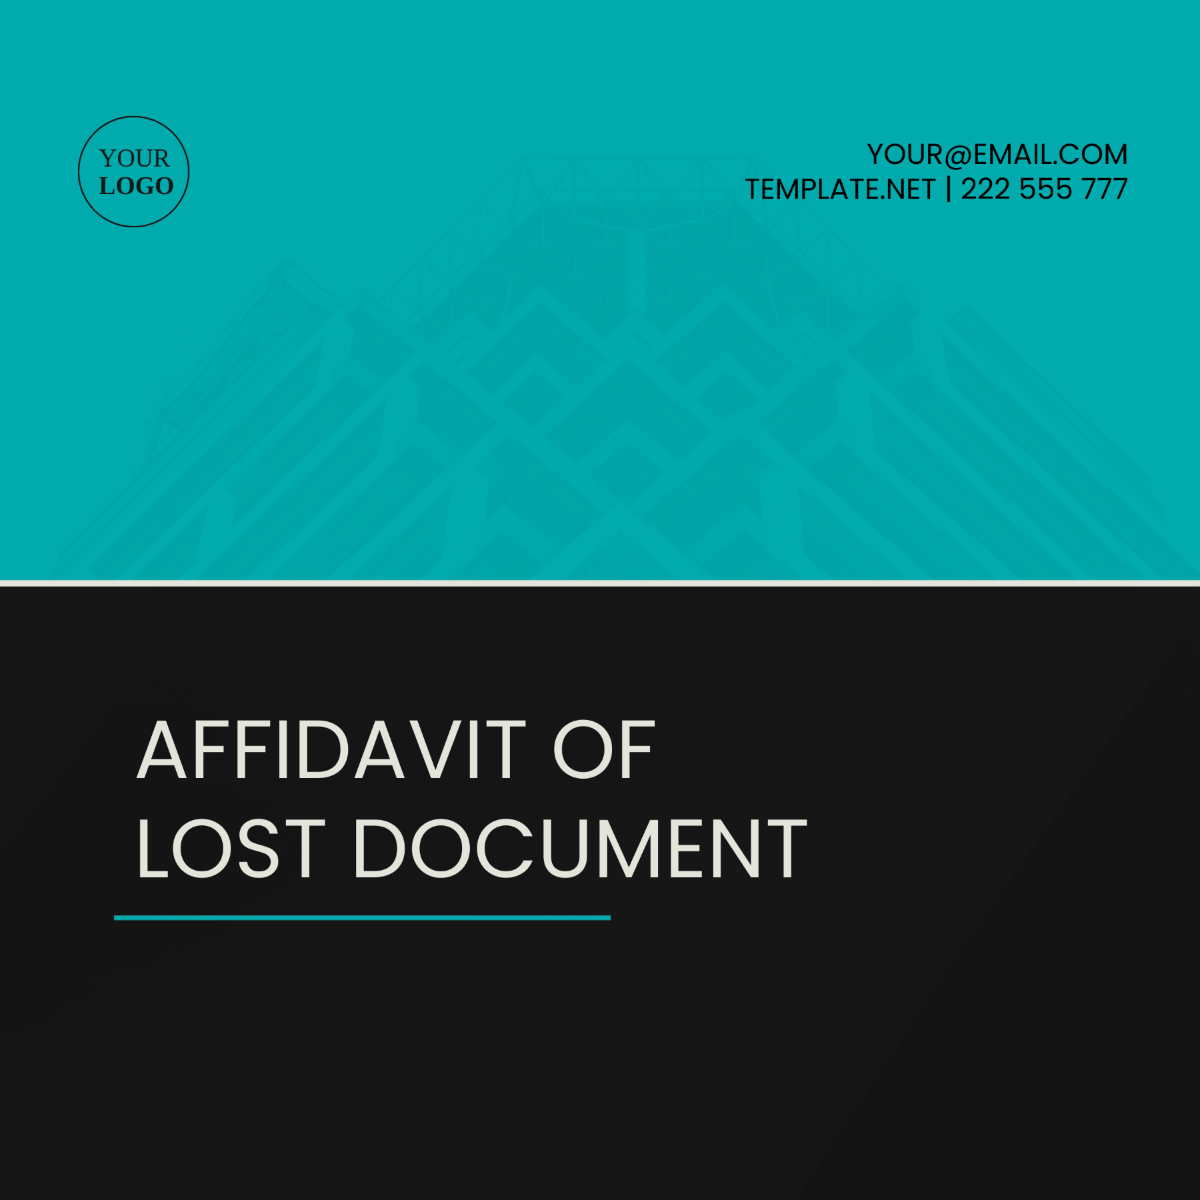 Affidavit of Lost Document Template